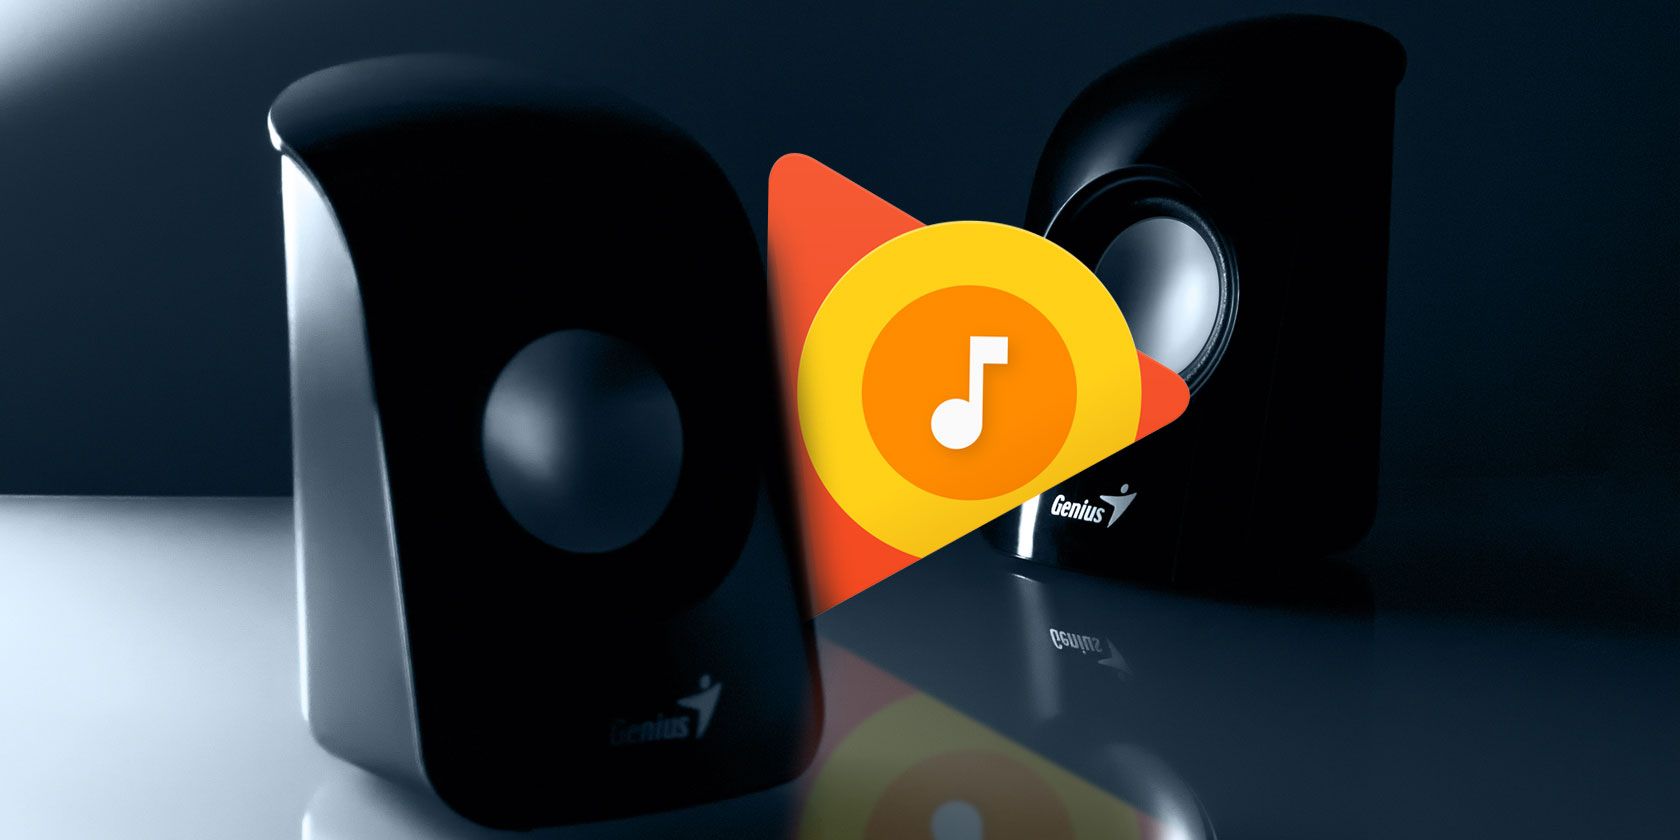 google play music manager desktop app